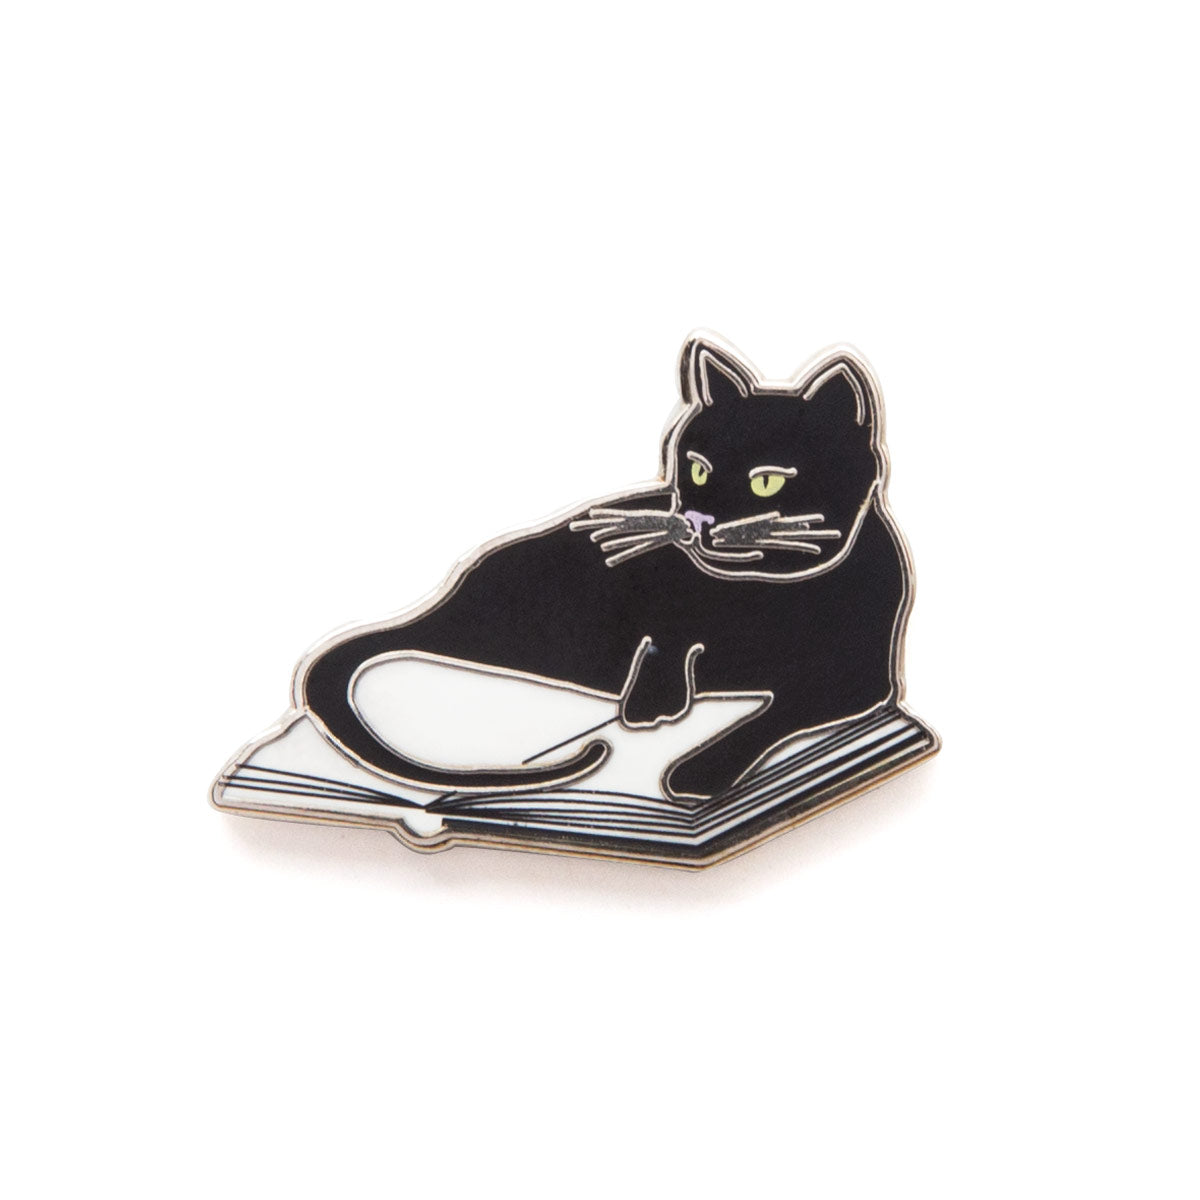 Book Cat Pin — Book Reading Cat Enamel Pin by boygirlparty – the  boygirlparty shop –